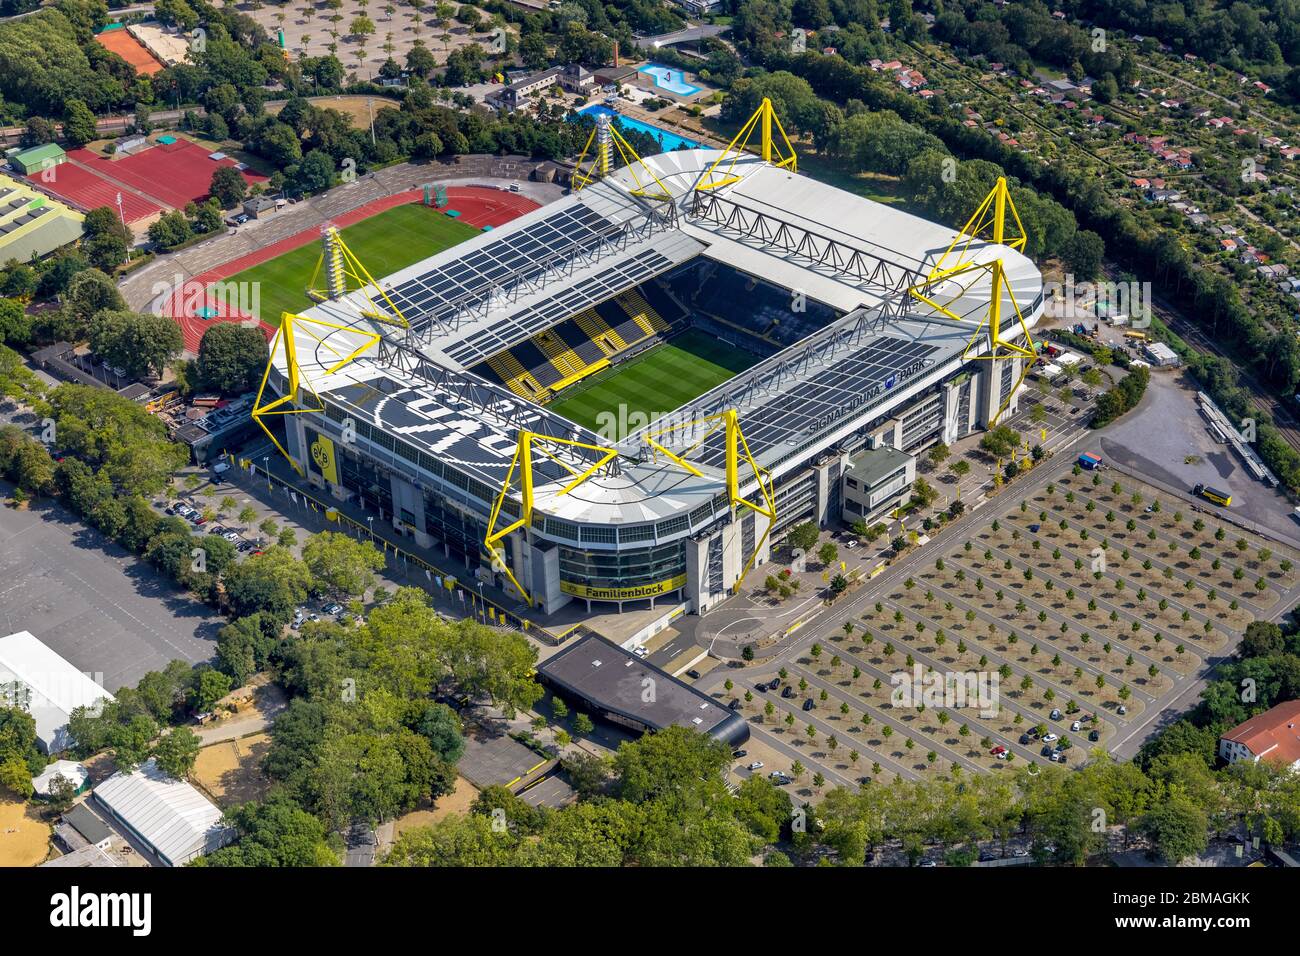 stade Westfalenstadion de Dortmund BVB, 08.08.2019, vue aérienne, Allemagne, Rhénanie-du-Nord-Westphalie, région de la Ruhr, Dortmund Banque D'Images